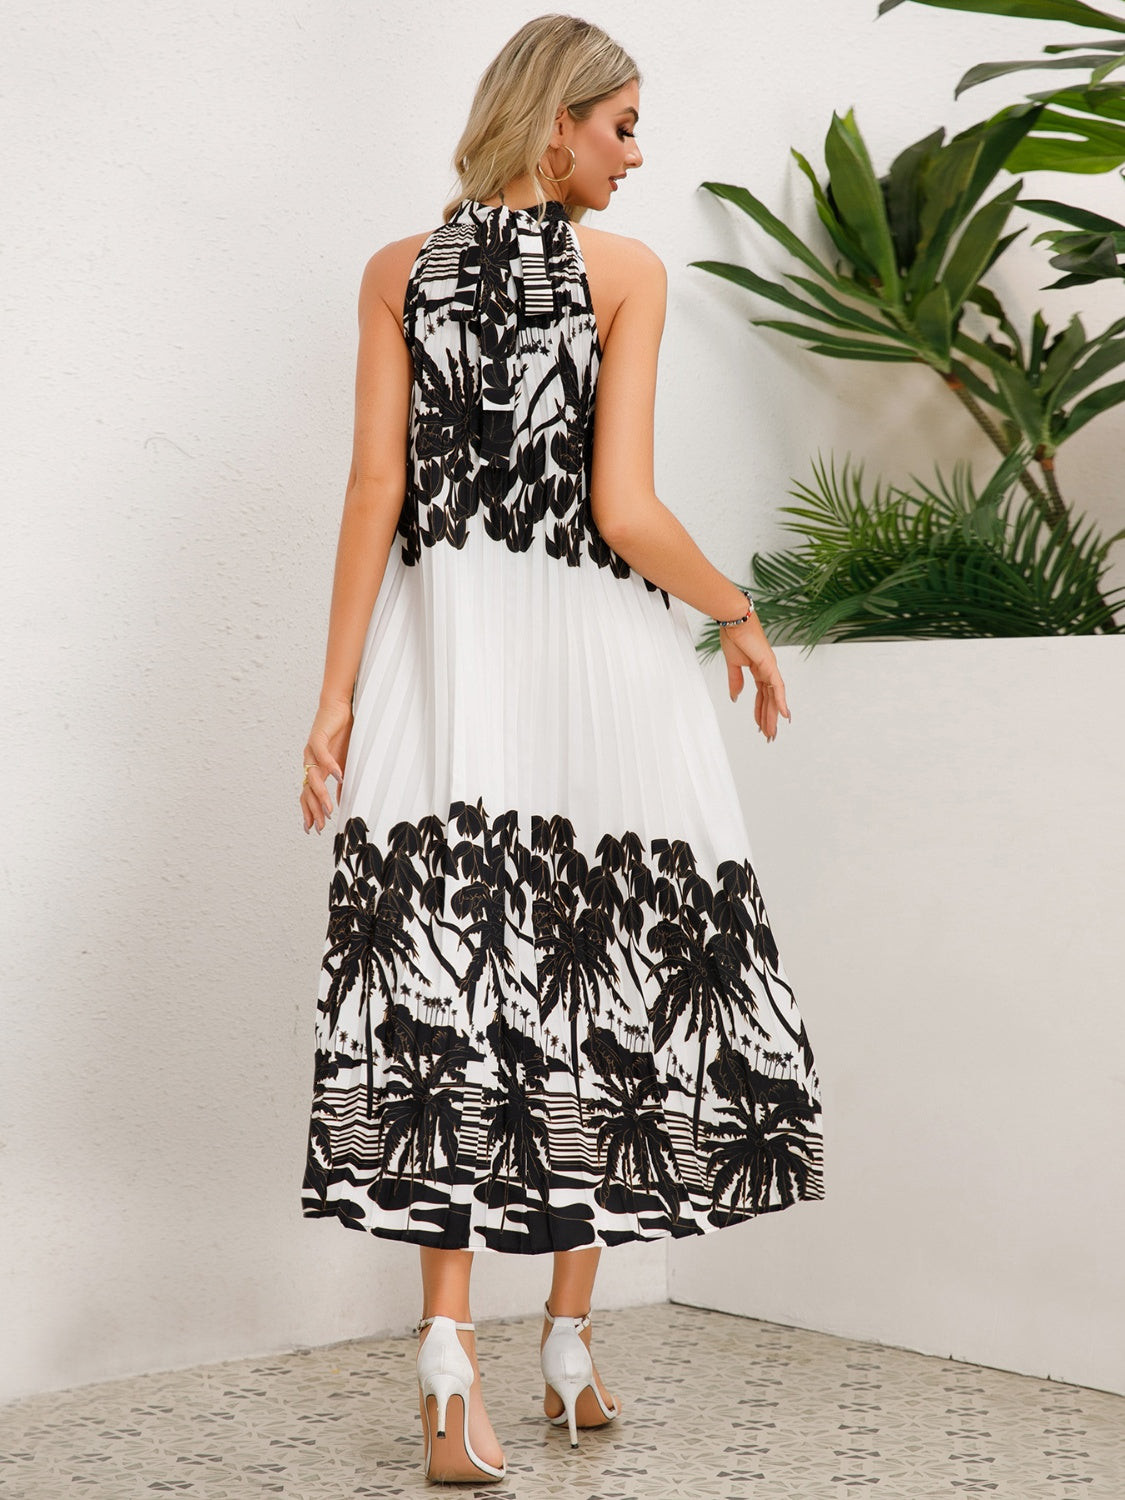 TEEK - Tied Halter Printed Sleeveless  Dress DRESS TEEK Trend   